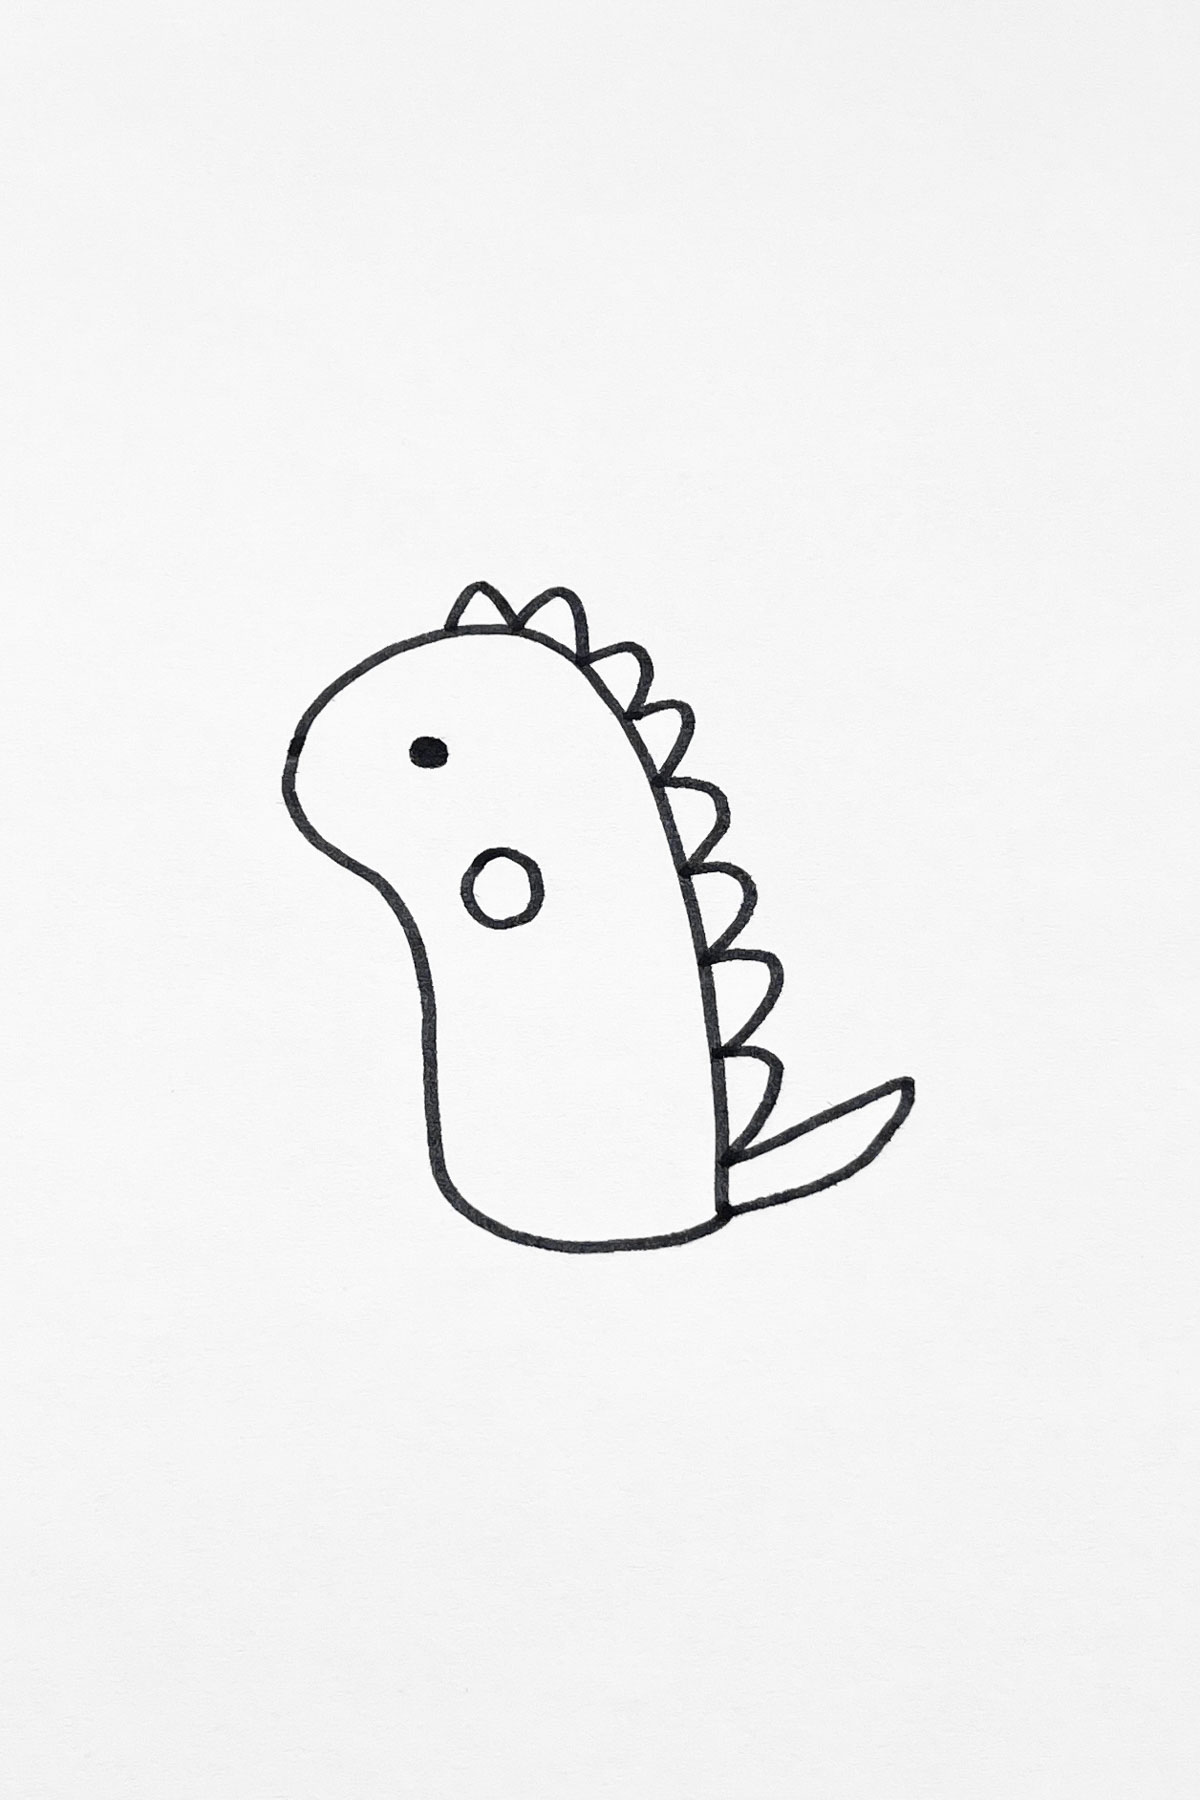 Dinosaur head drawing